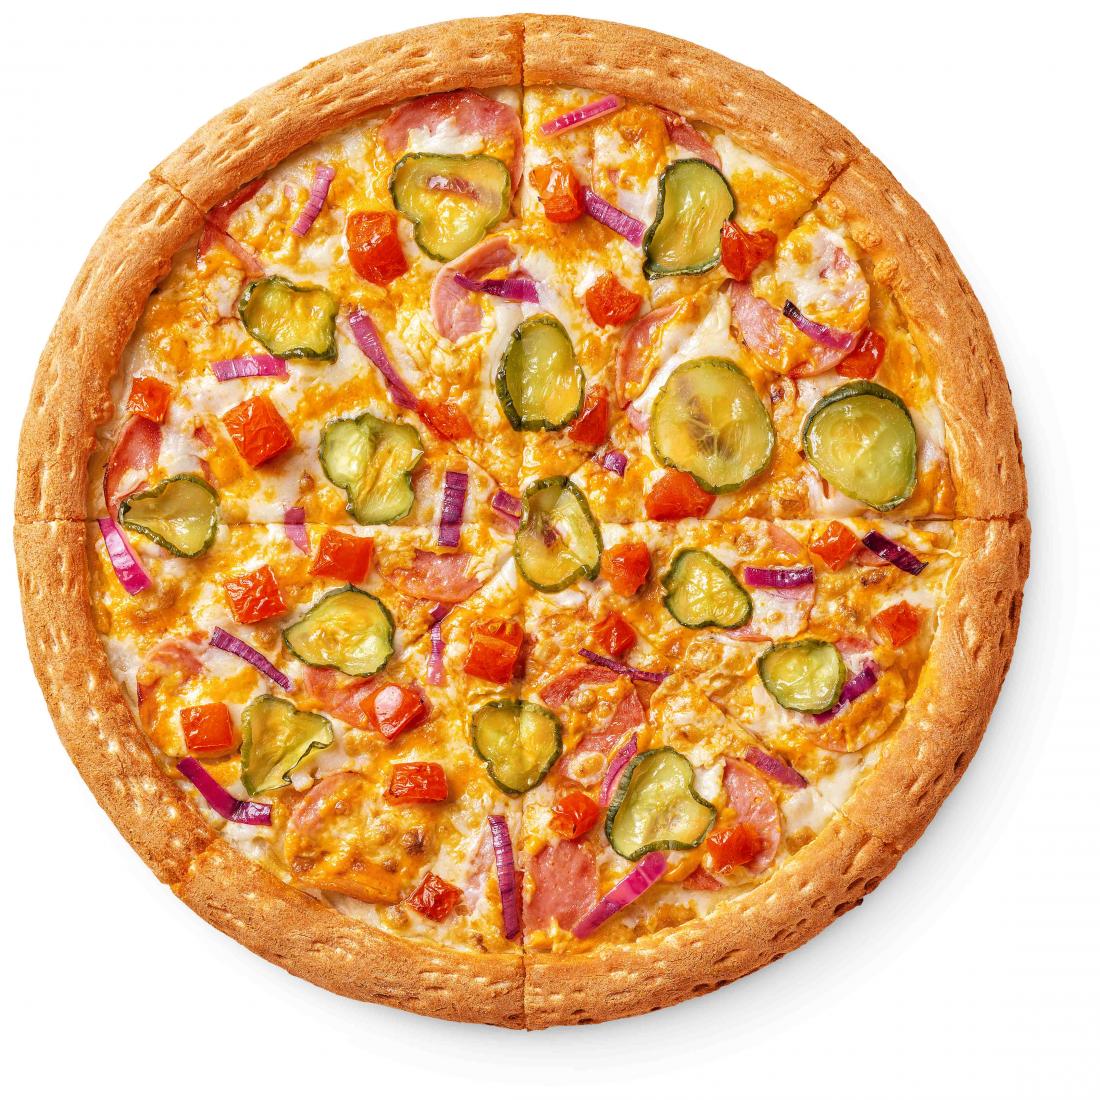 состав пиццы пепперони в додо пицца фото 57